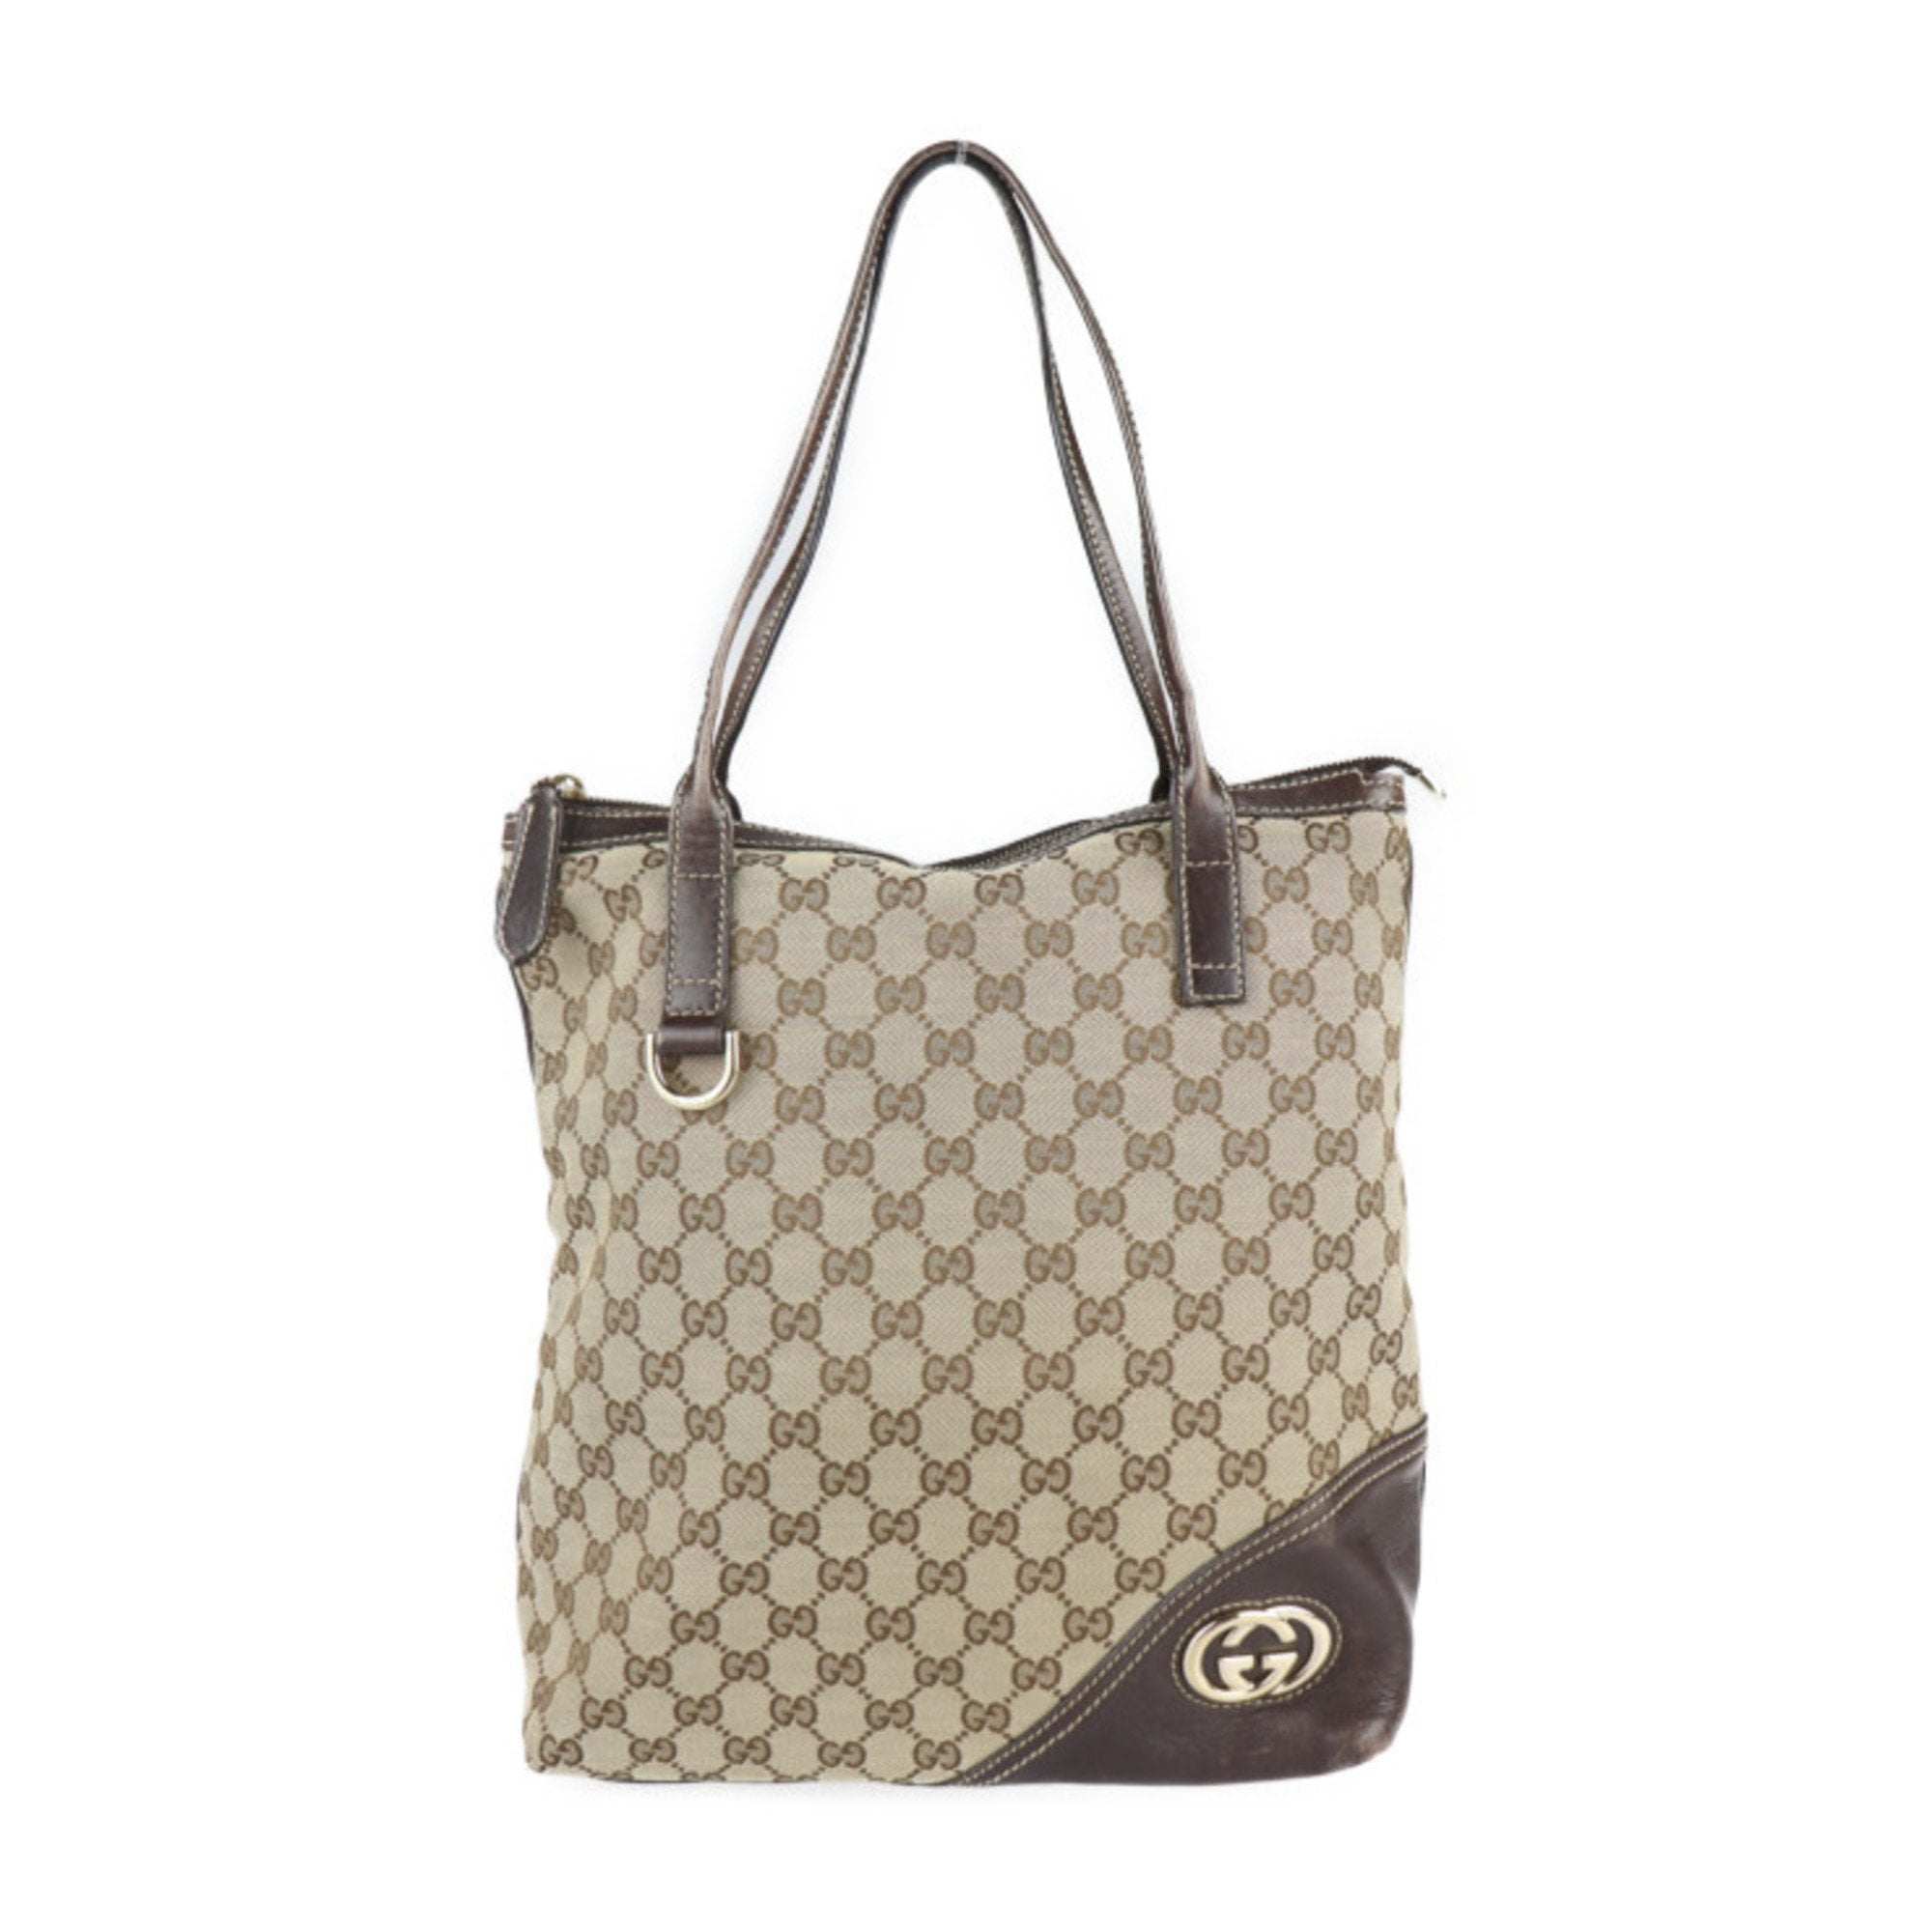 Gucci Interlocking G Tote Bag